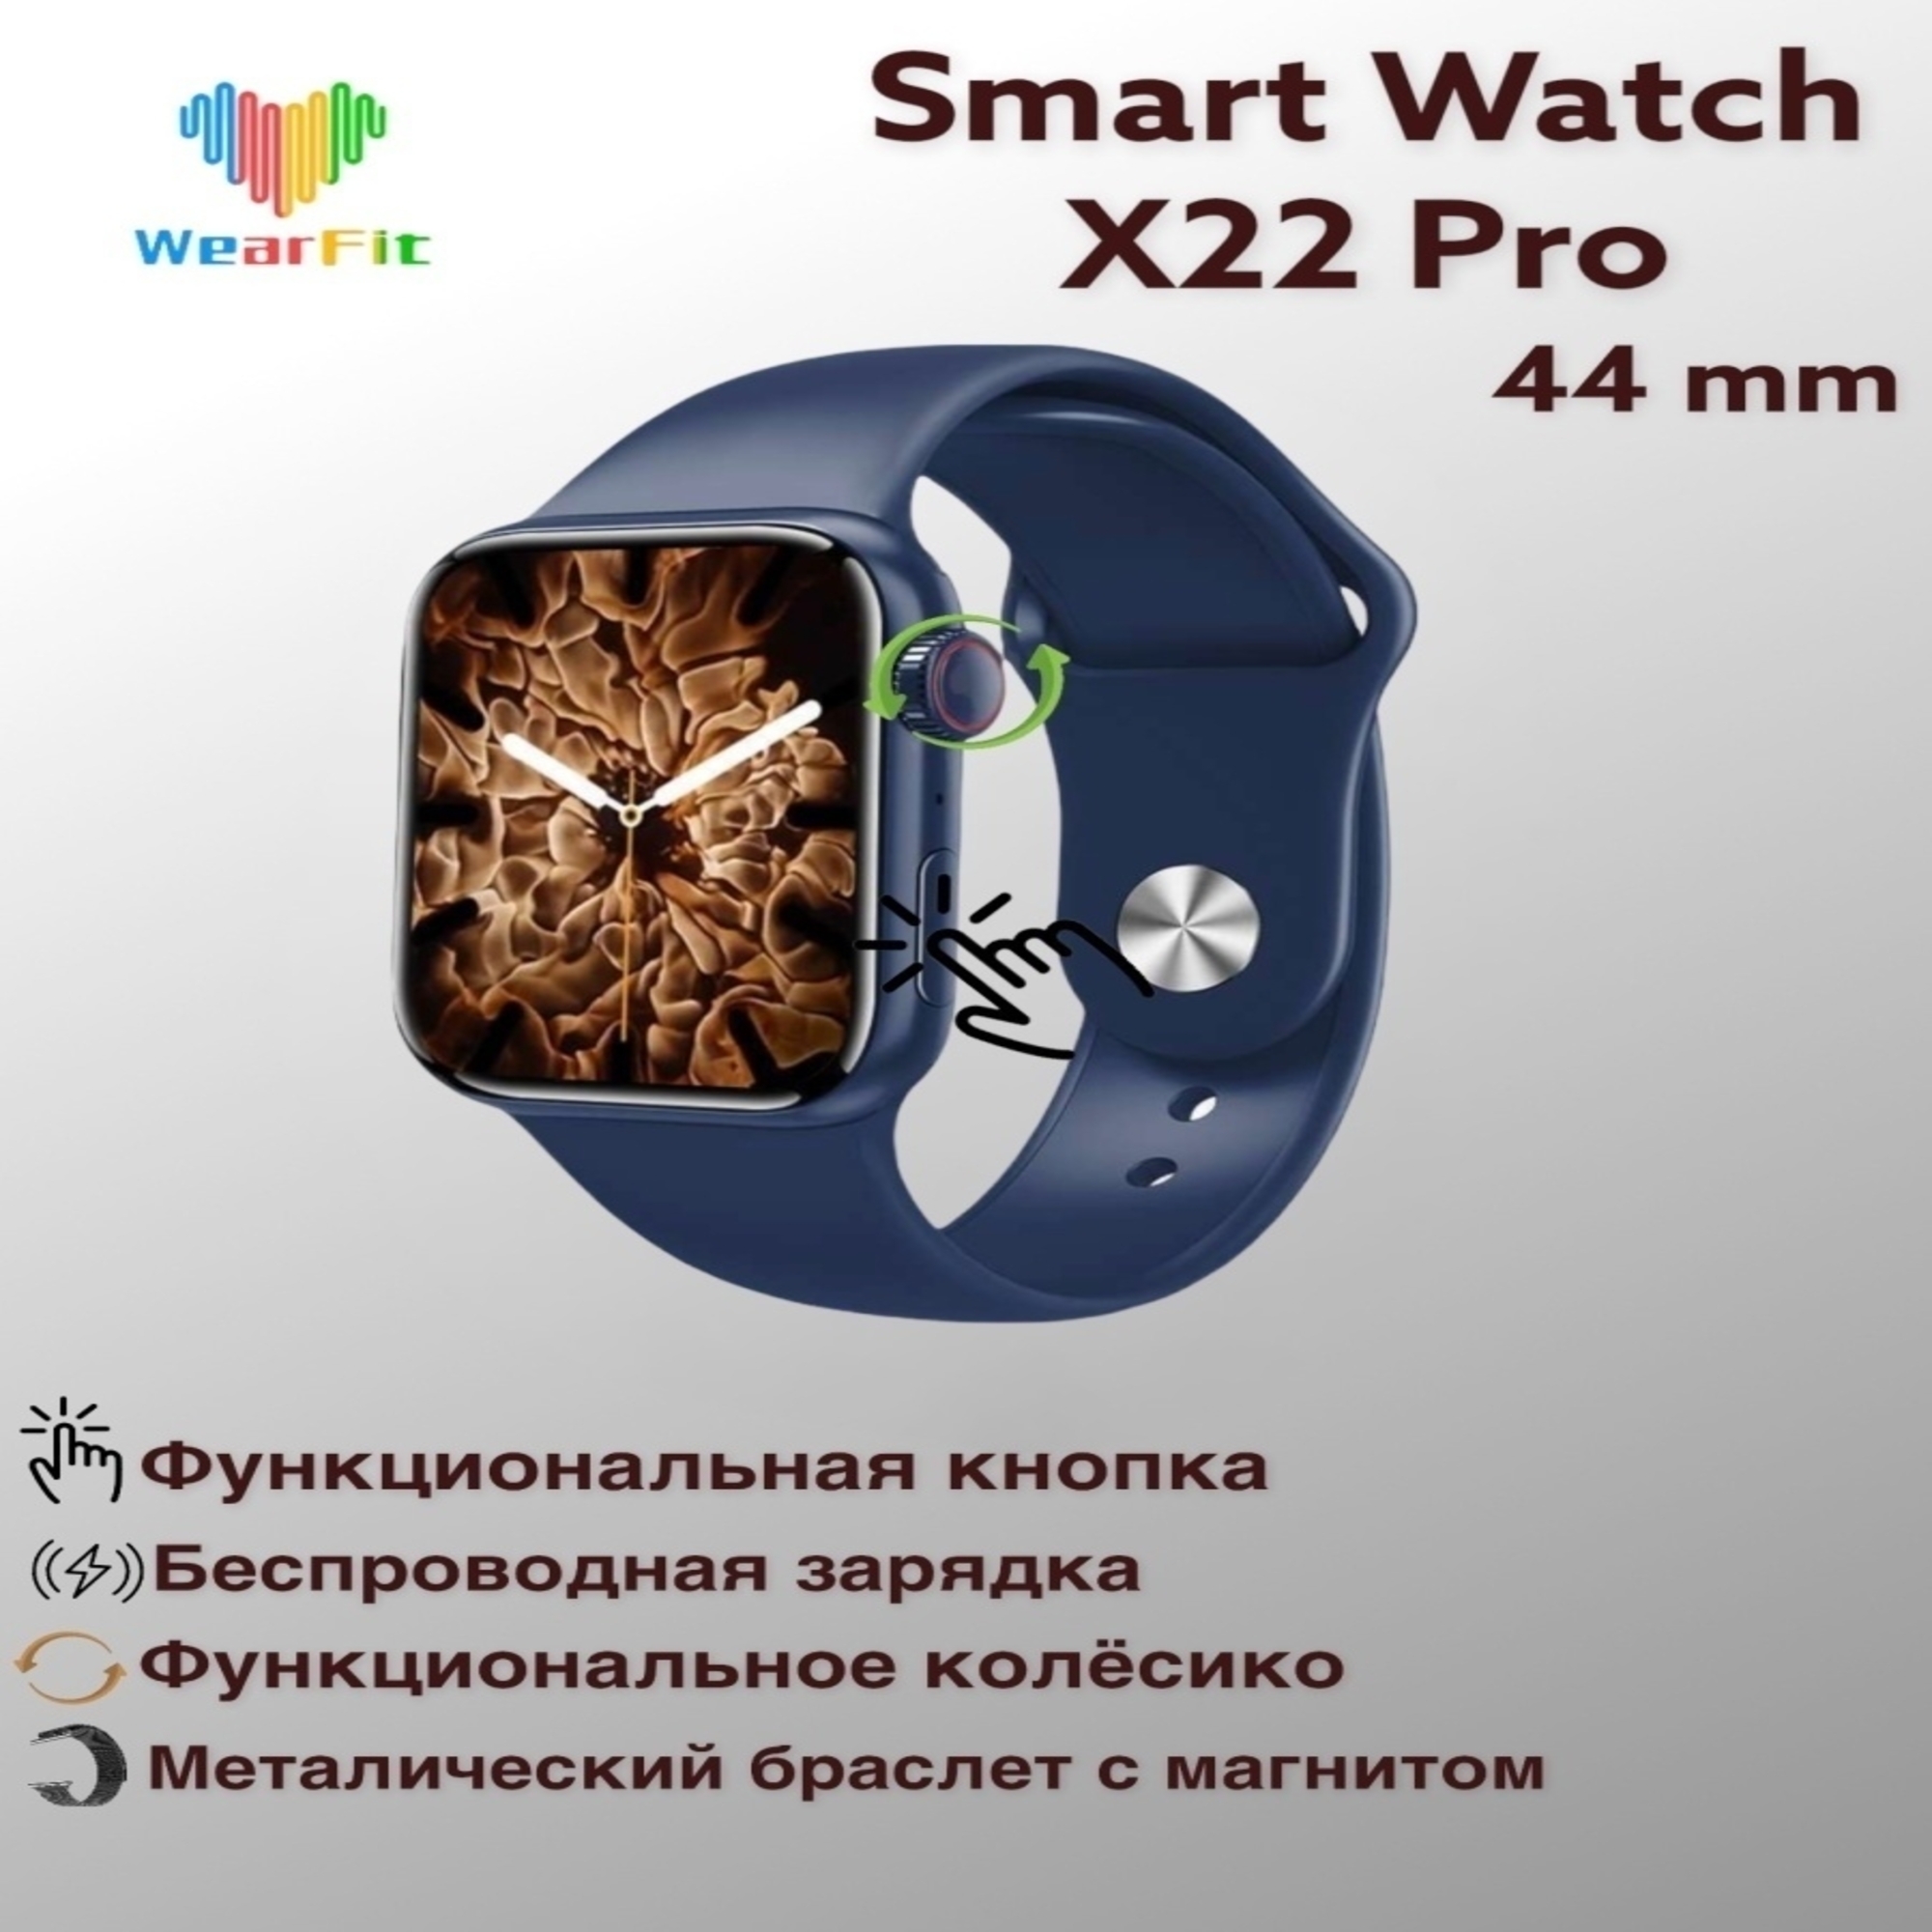 Программу часы x8 pro. Смарт часы x22 Pro. Часы x22 Pro NFC. Умные часы смарт вотч x22 про. Х 22 Pro (44 mm) смарт часы.